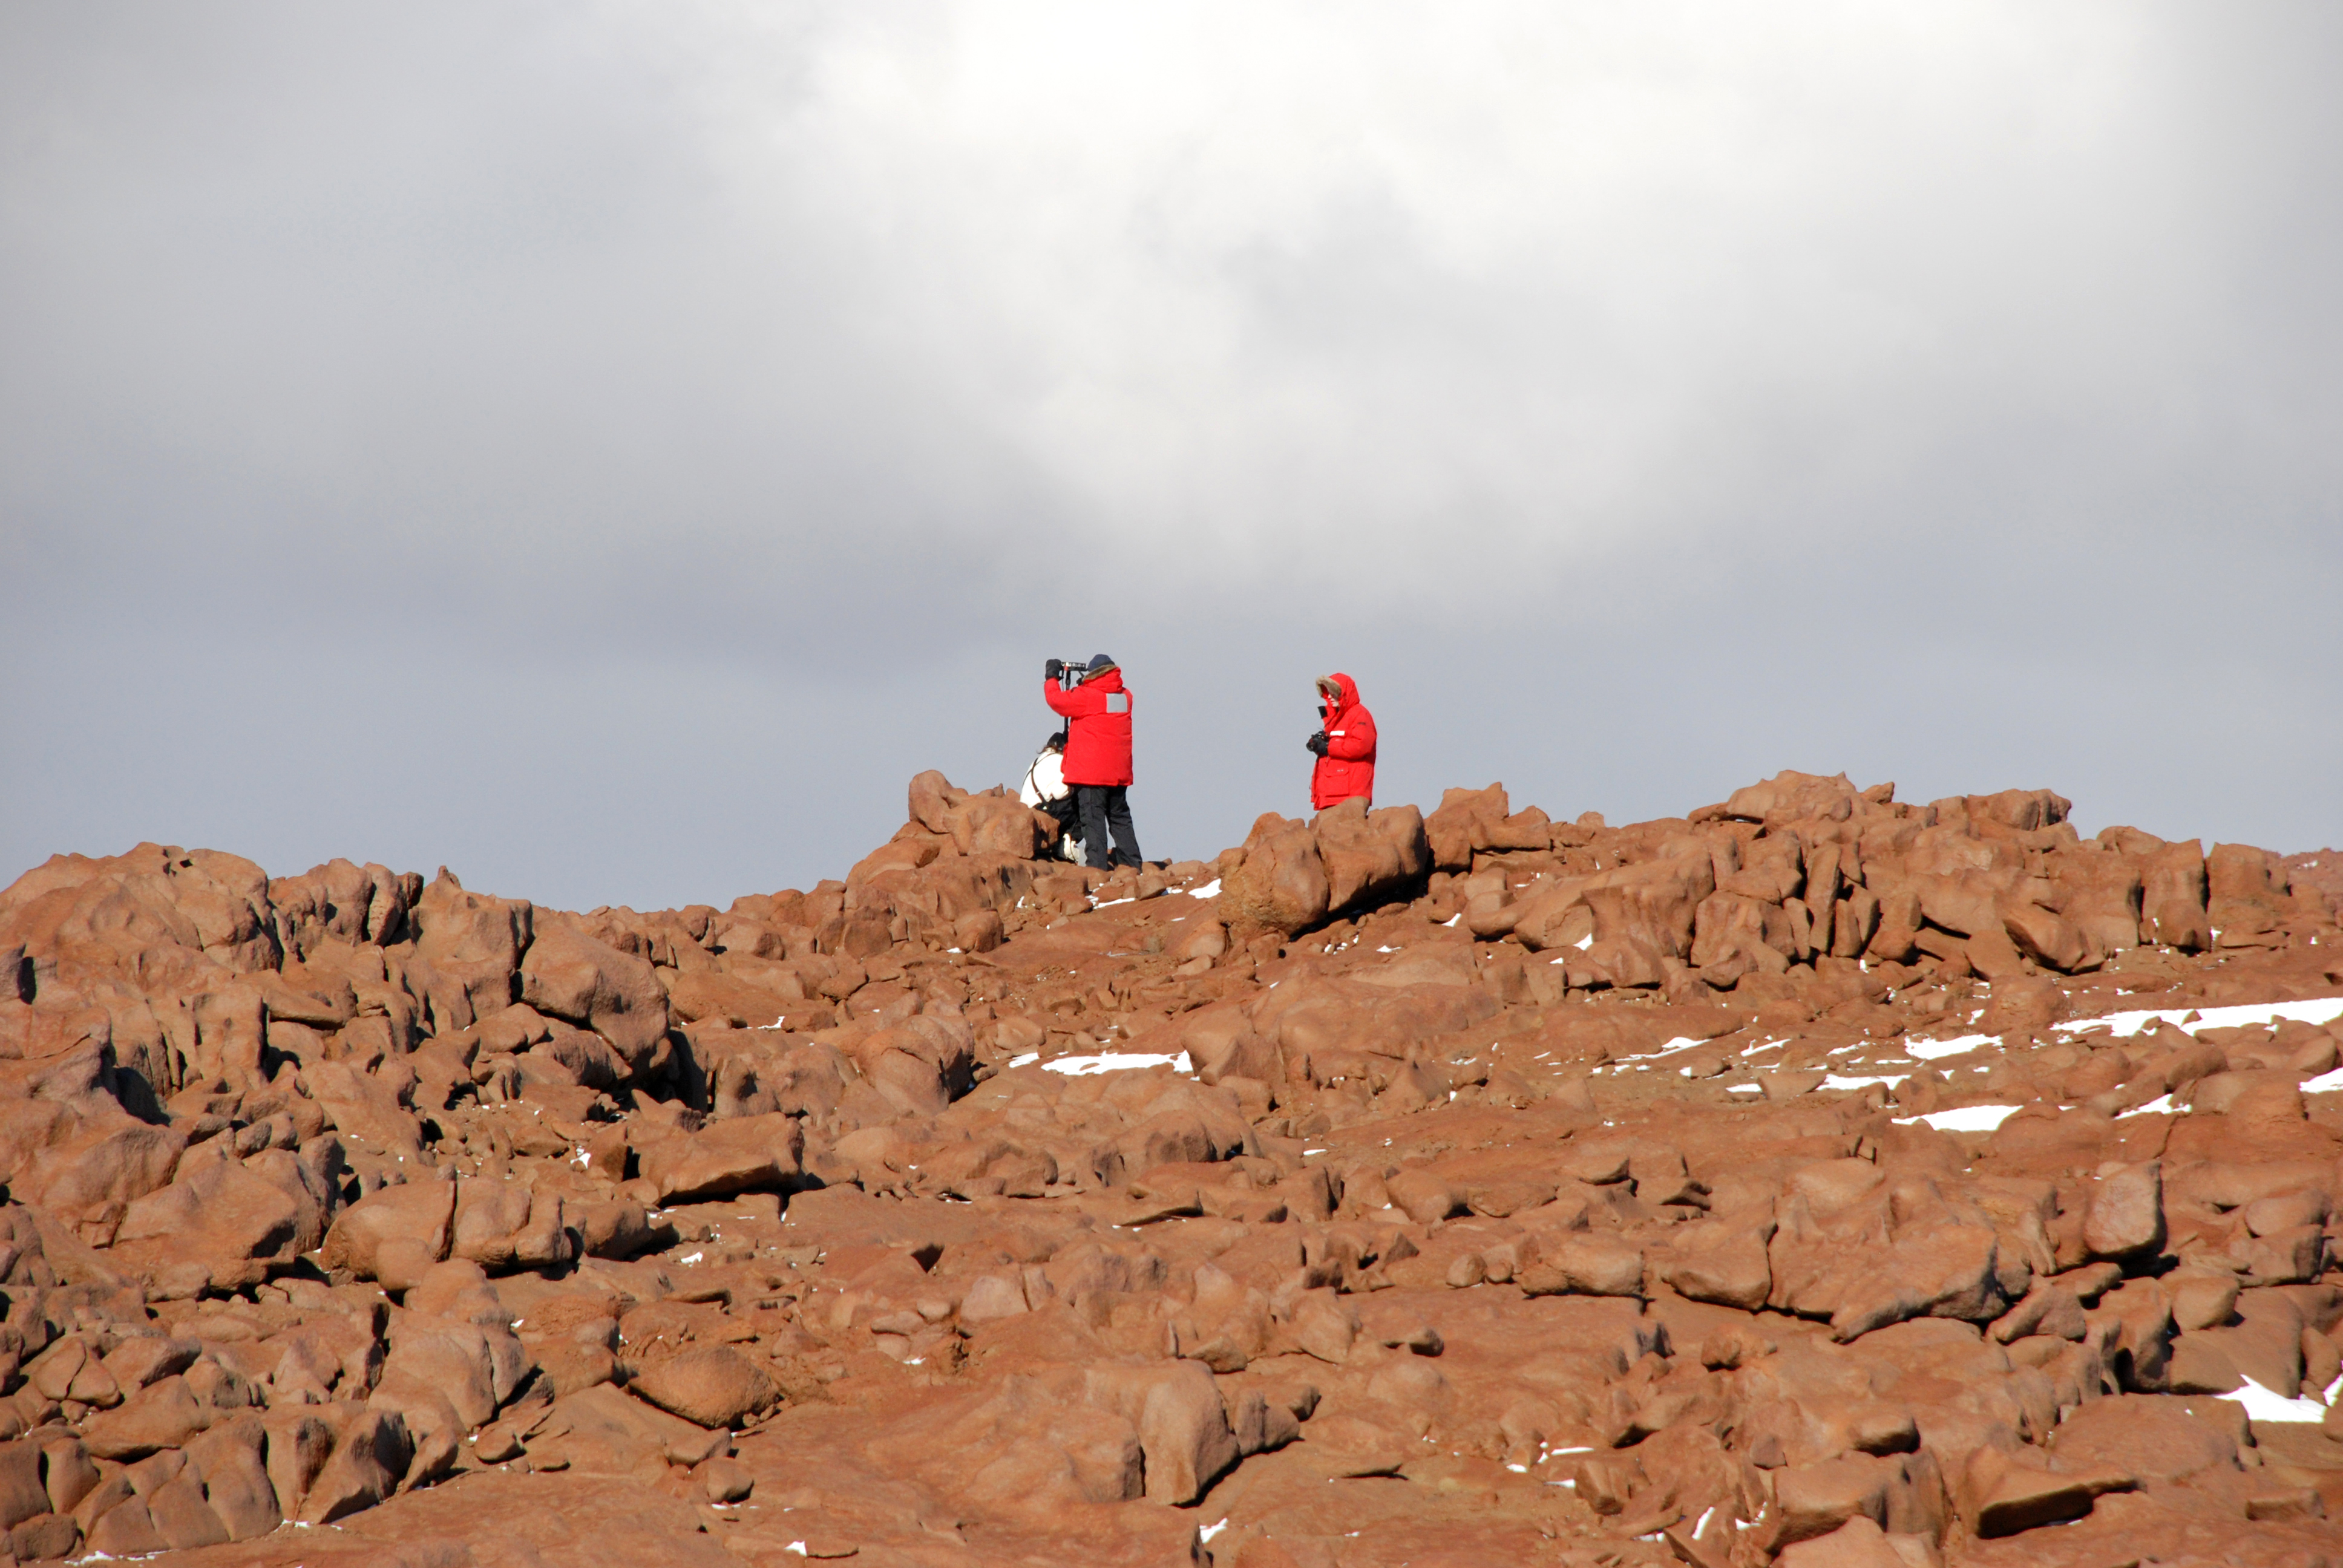 People in red parkas on a rocky terrain.